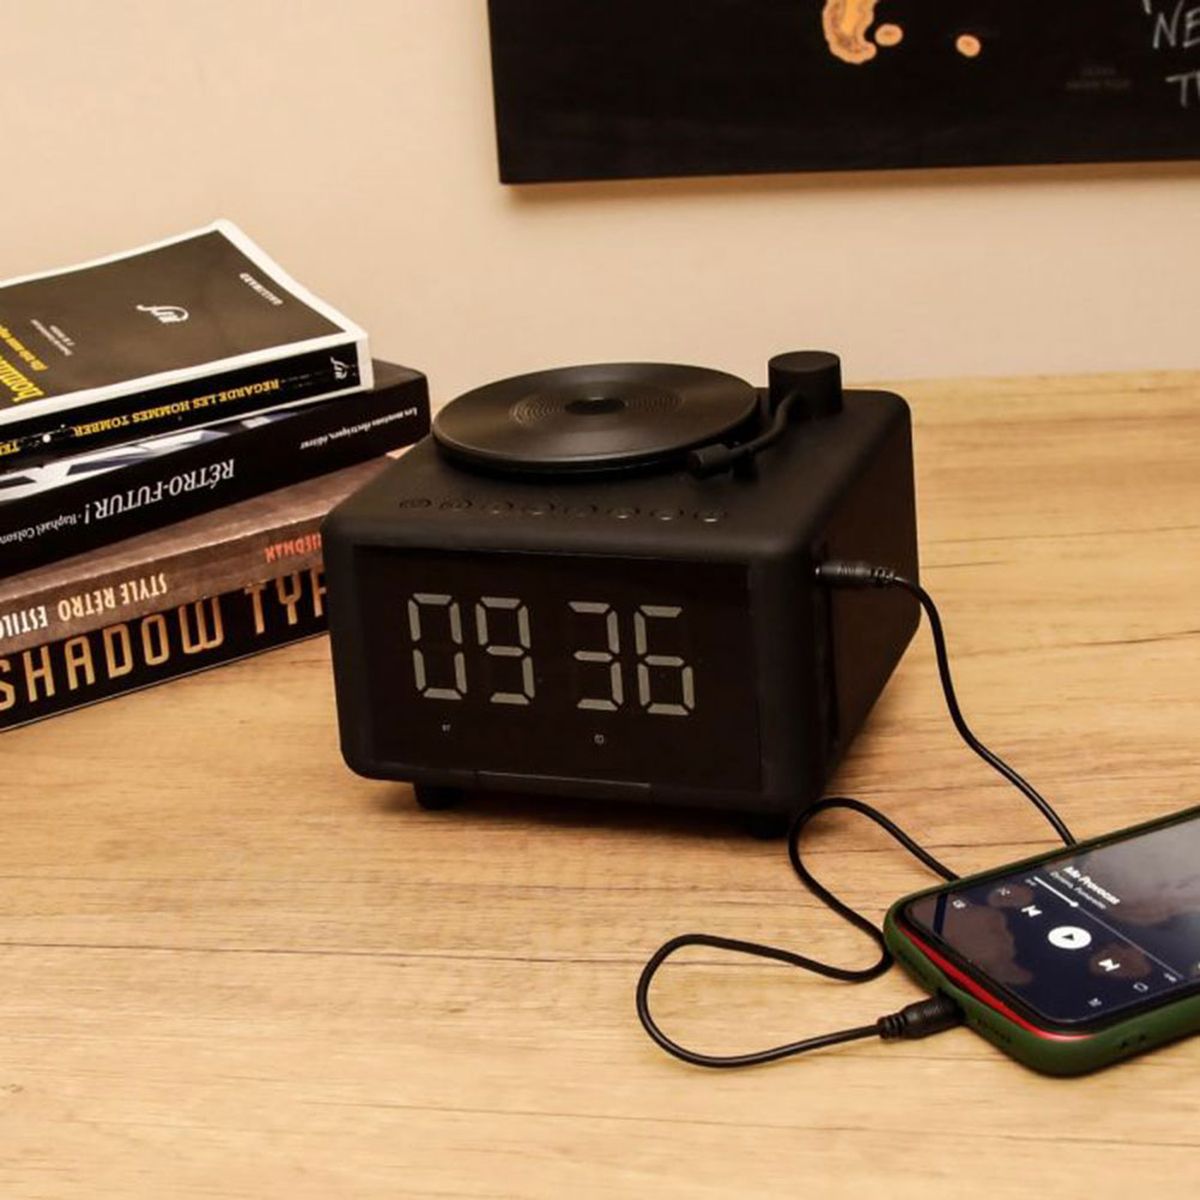 Black record player speaker alarm clock